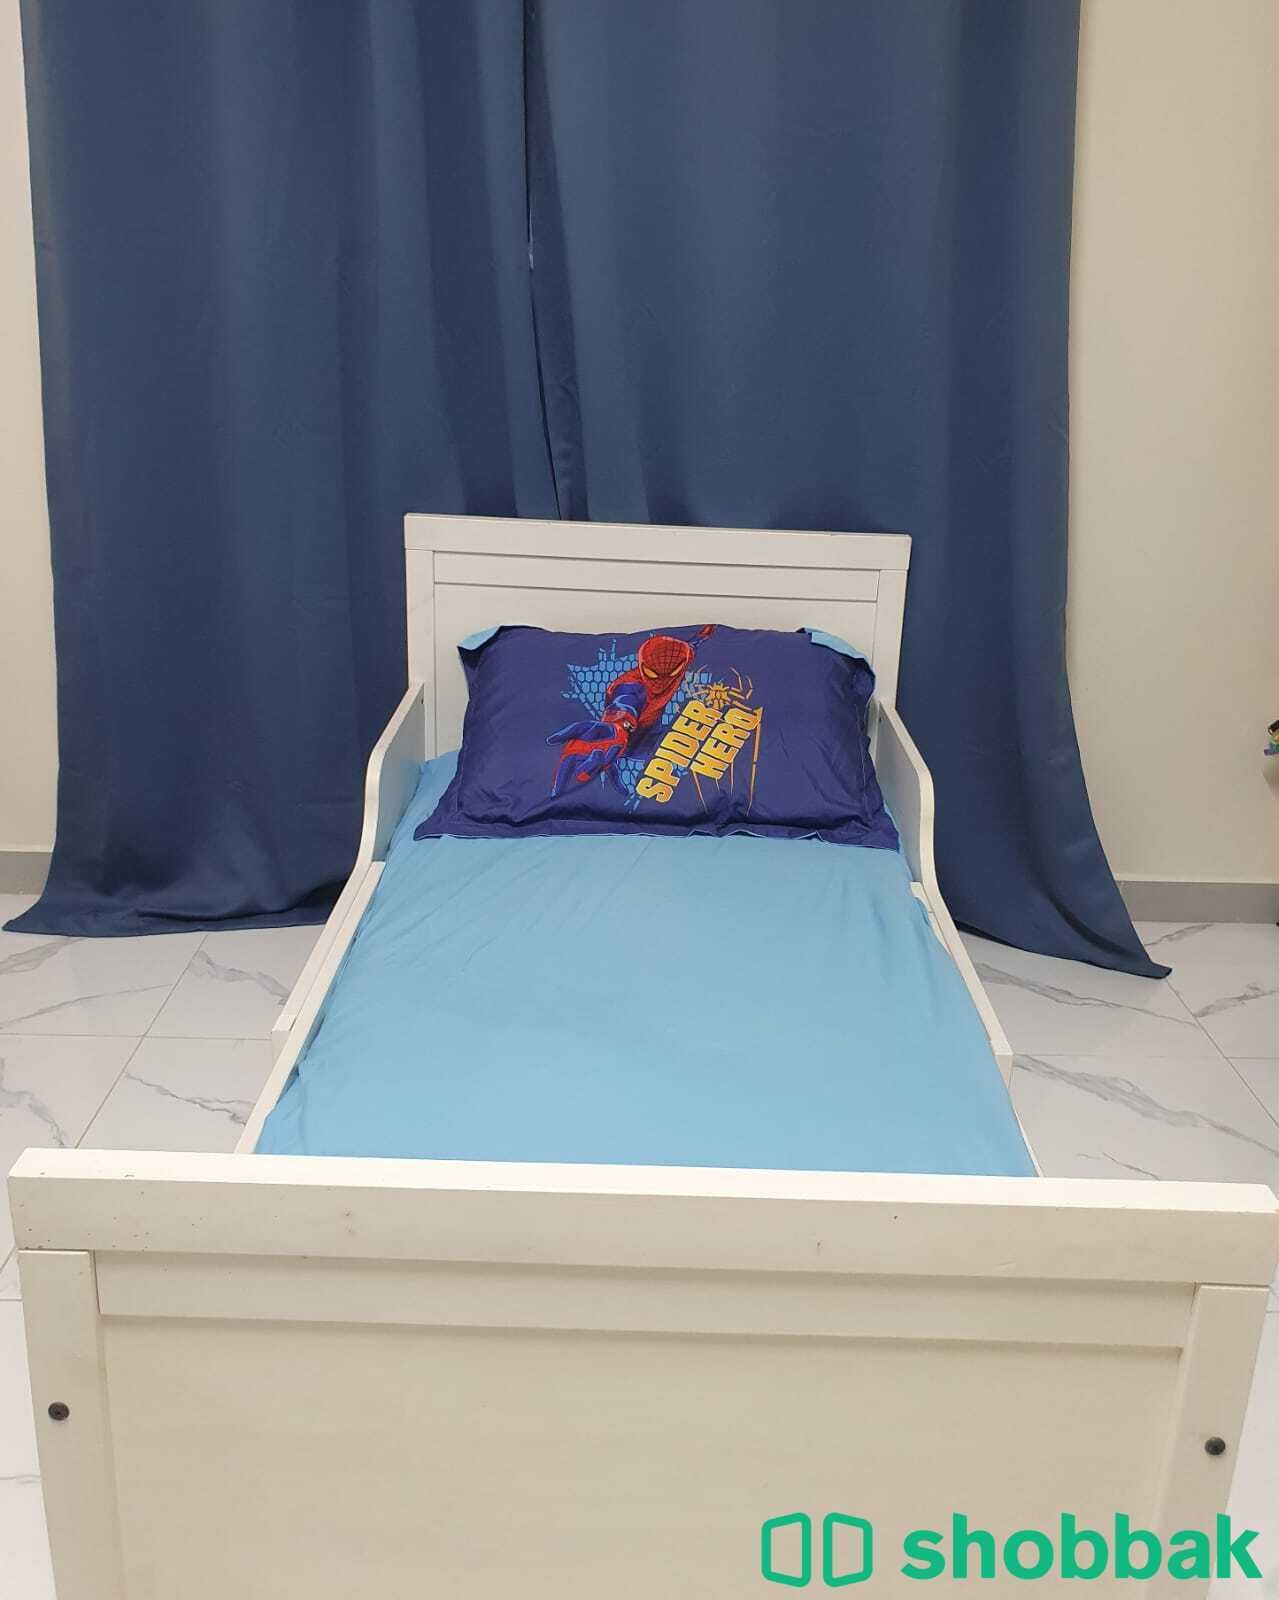 سرير ايكيا للاطفال قابل للتطويل 200cm*80cm Shobbak Saudi Arabia